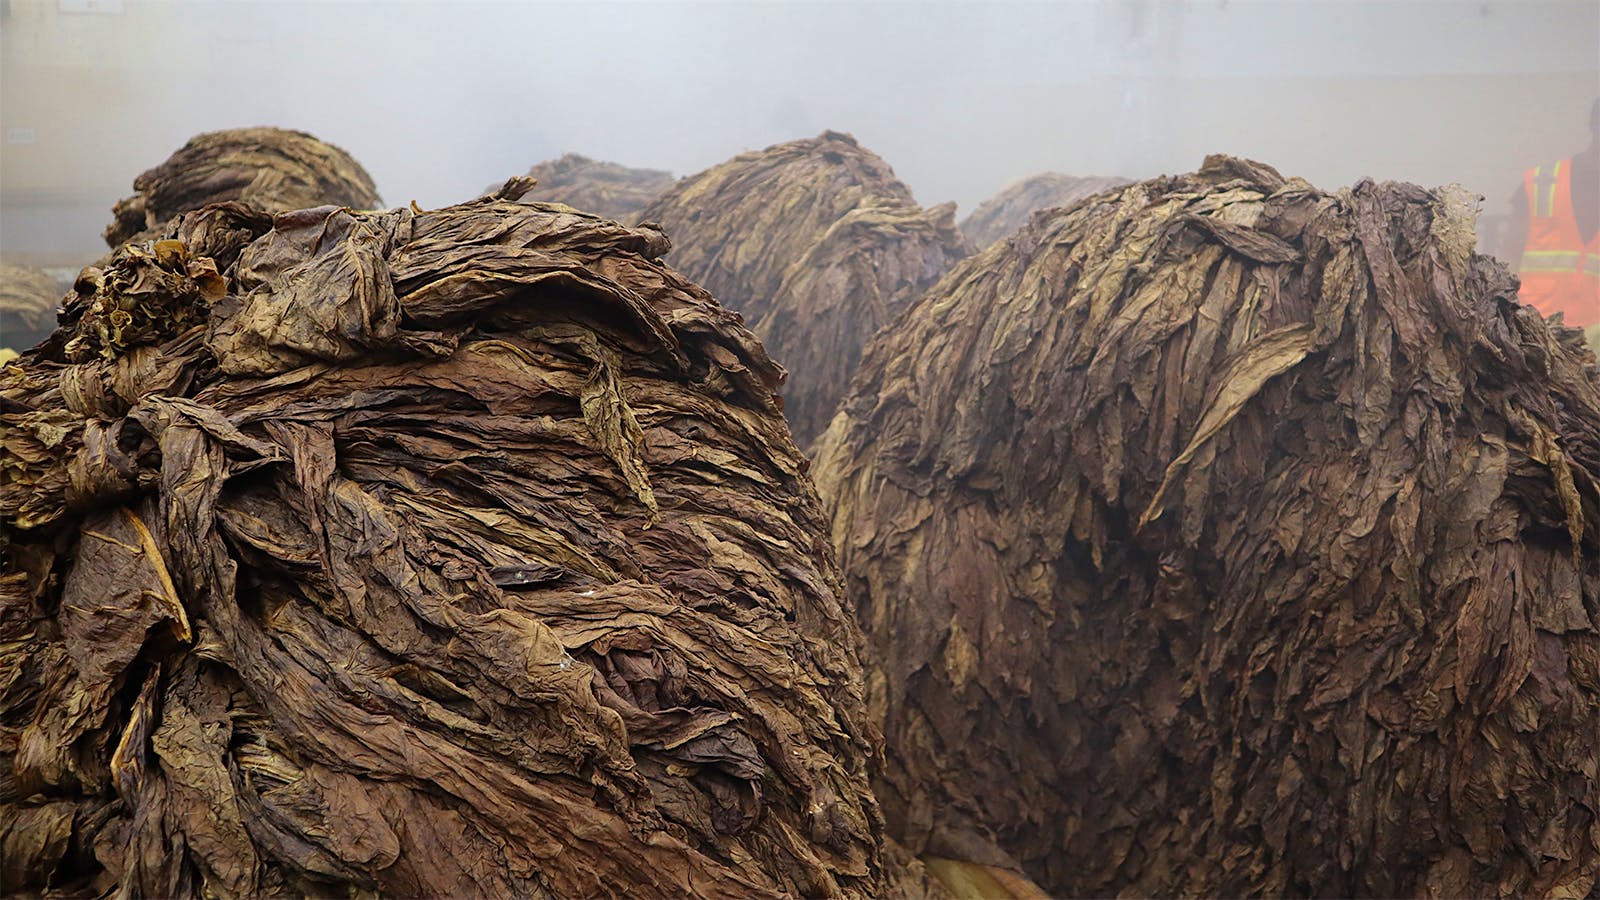 Piles of tobacco inside Tabacalera de Garcia in the Dominican.